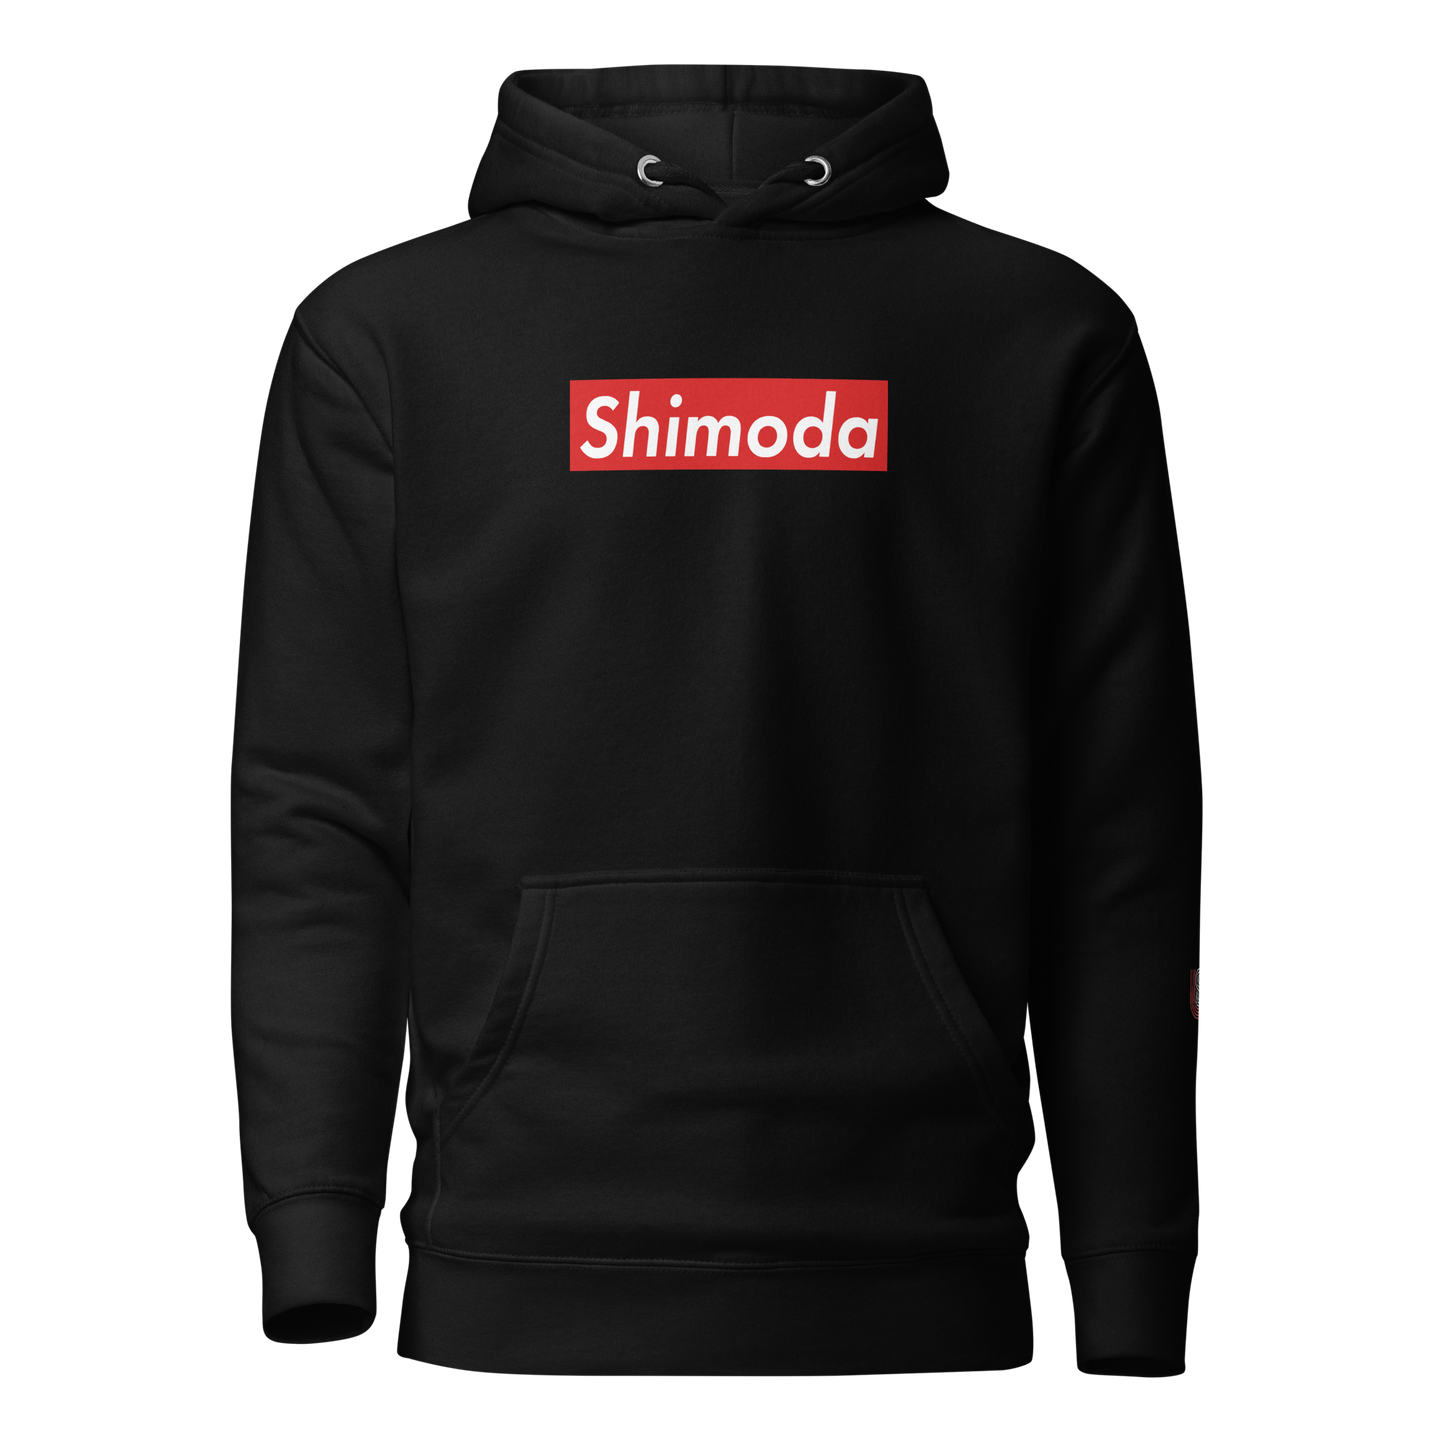 The Shimoda Hoodie